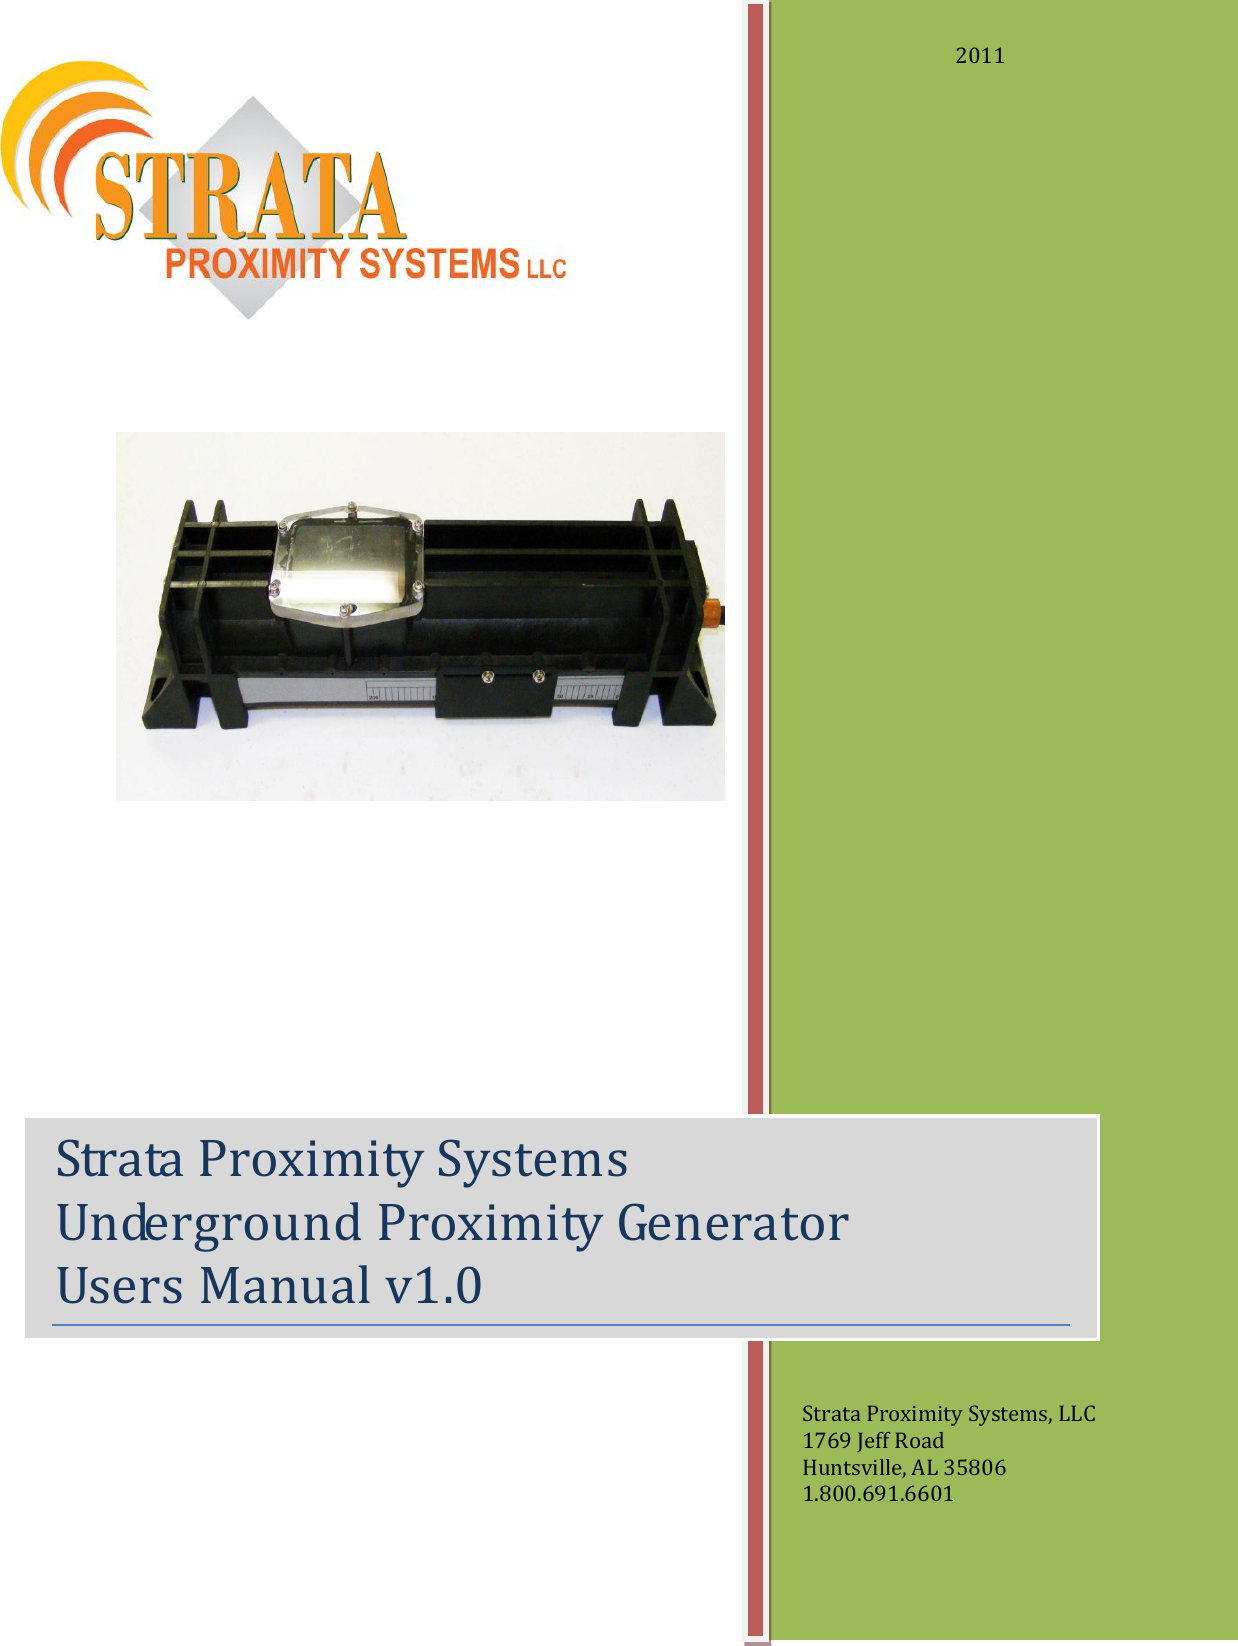                                  Strata Proximity Systems Underground Proximity Generator  Users Manual v1.0   2011 Strata Proximity Systems, LLC 1769 Jeff Road Huntsville, AL 35806 1.800.691.6601 